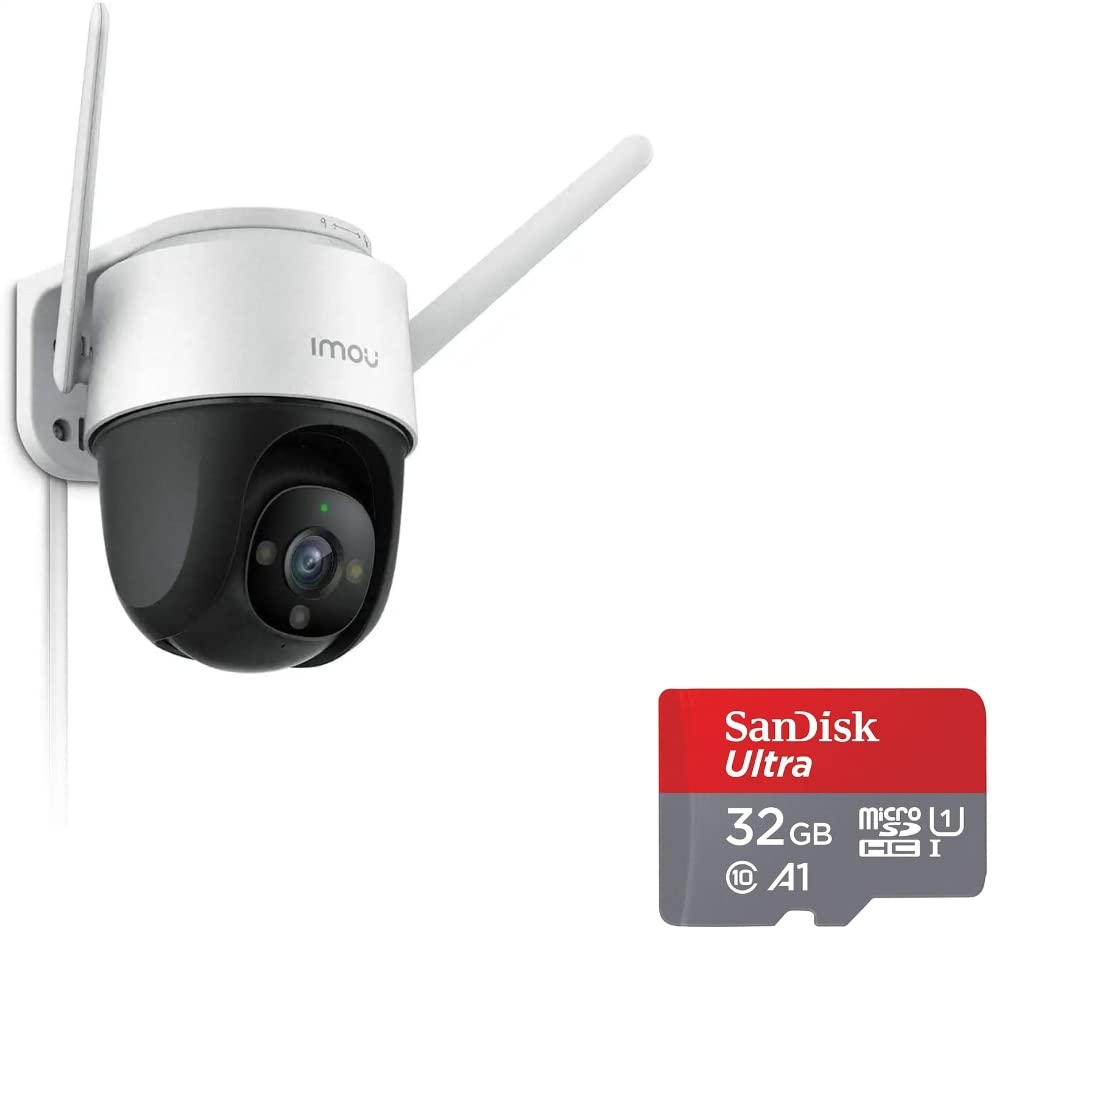 DAHUA Outdoor Camera with Night Vision, Microphone | 1080P, 2.4G Wi-Fi Camera, IPC-S21FP | 32GB Memory Card